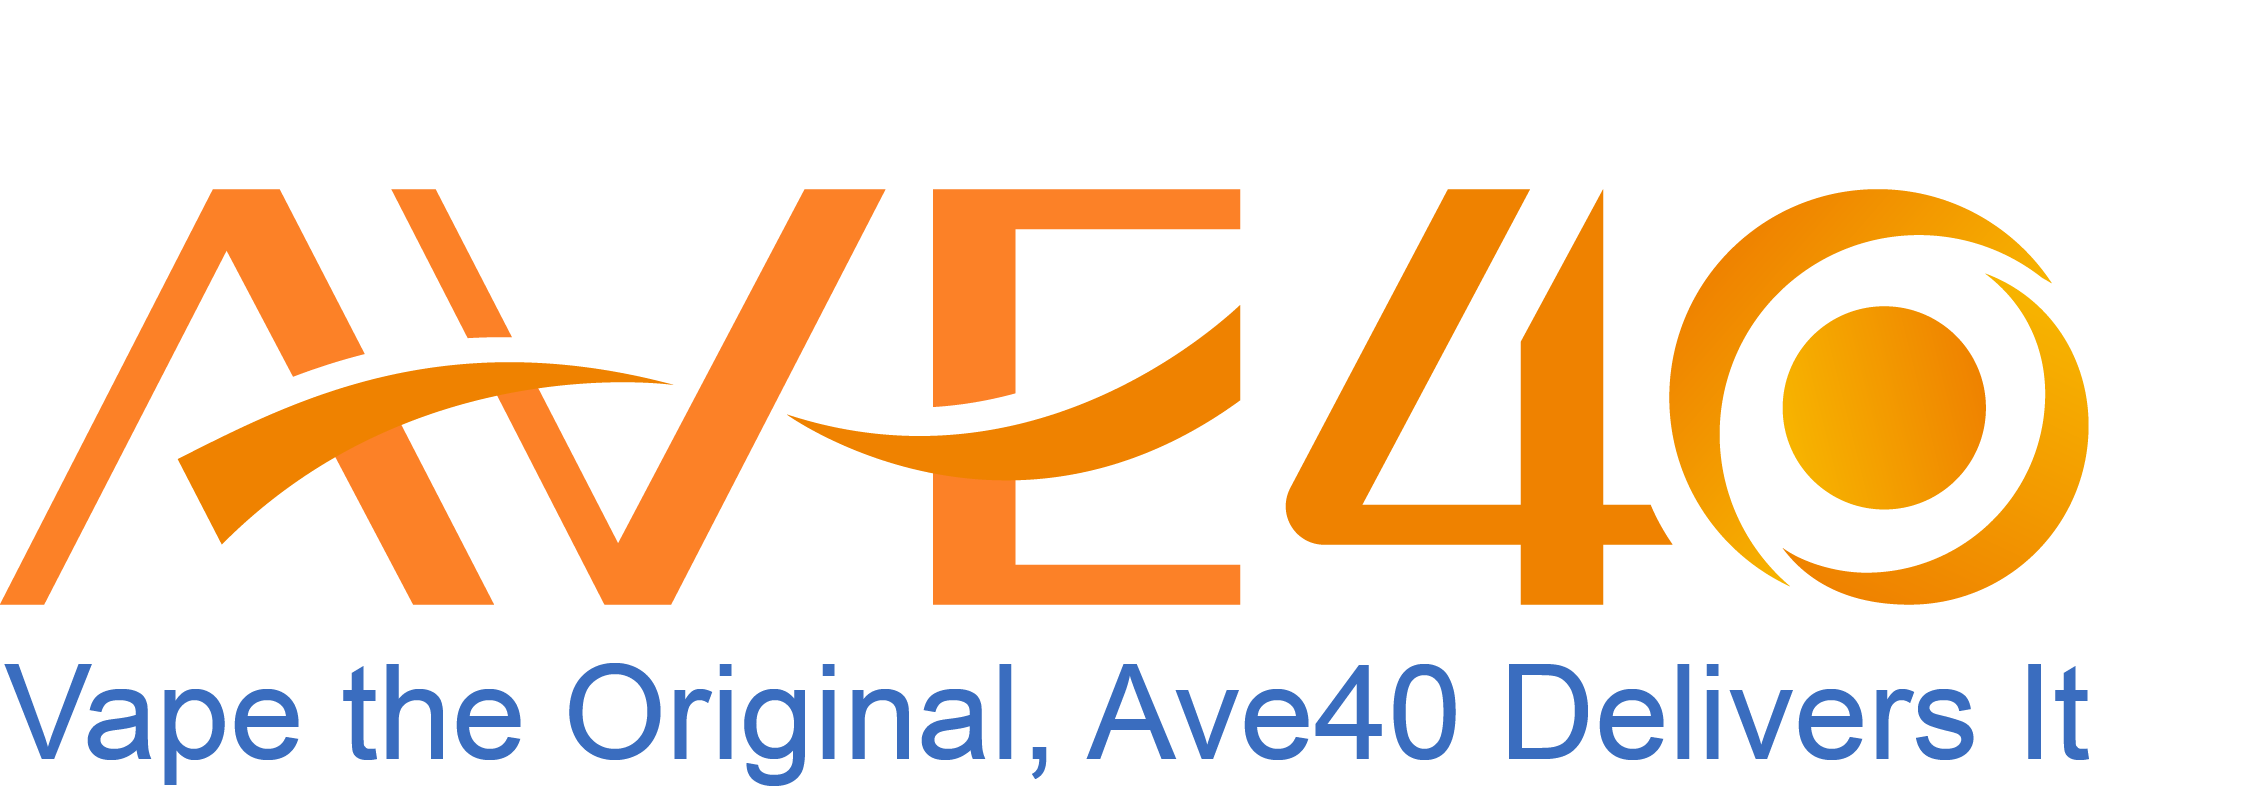 Company Logo For Avenue40 E-Commerce Shenzhen Co., Ltd.'